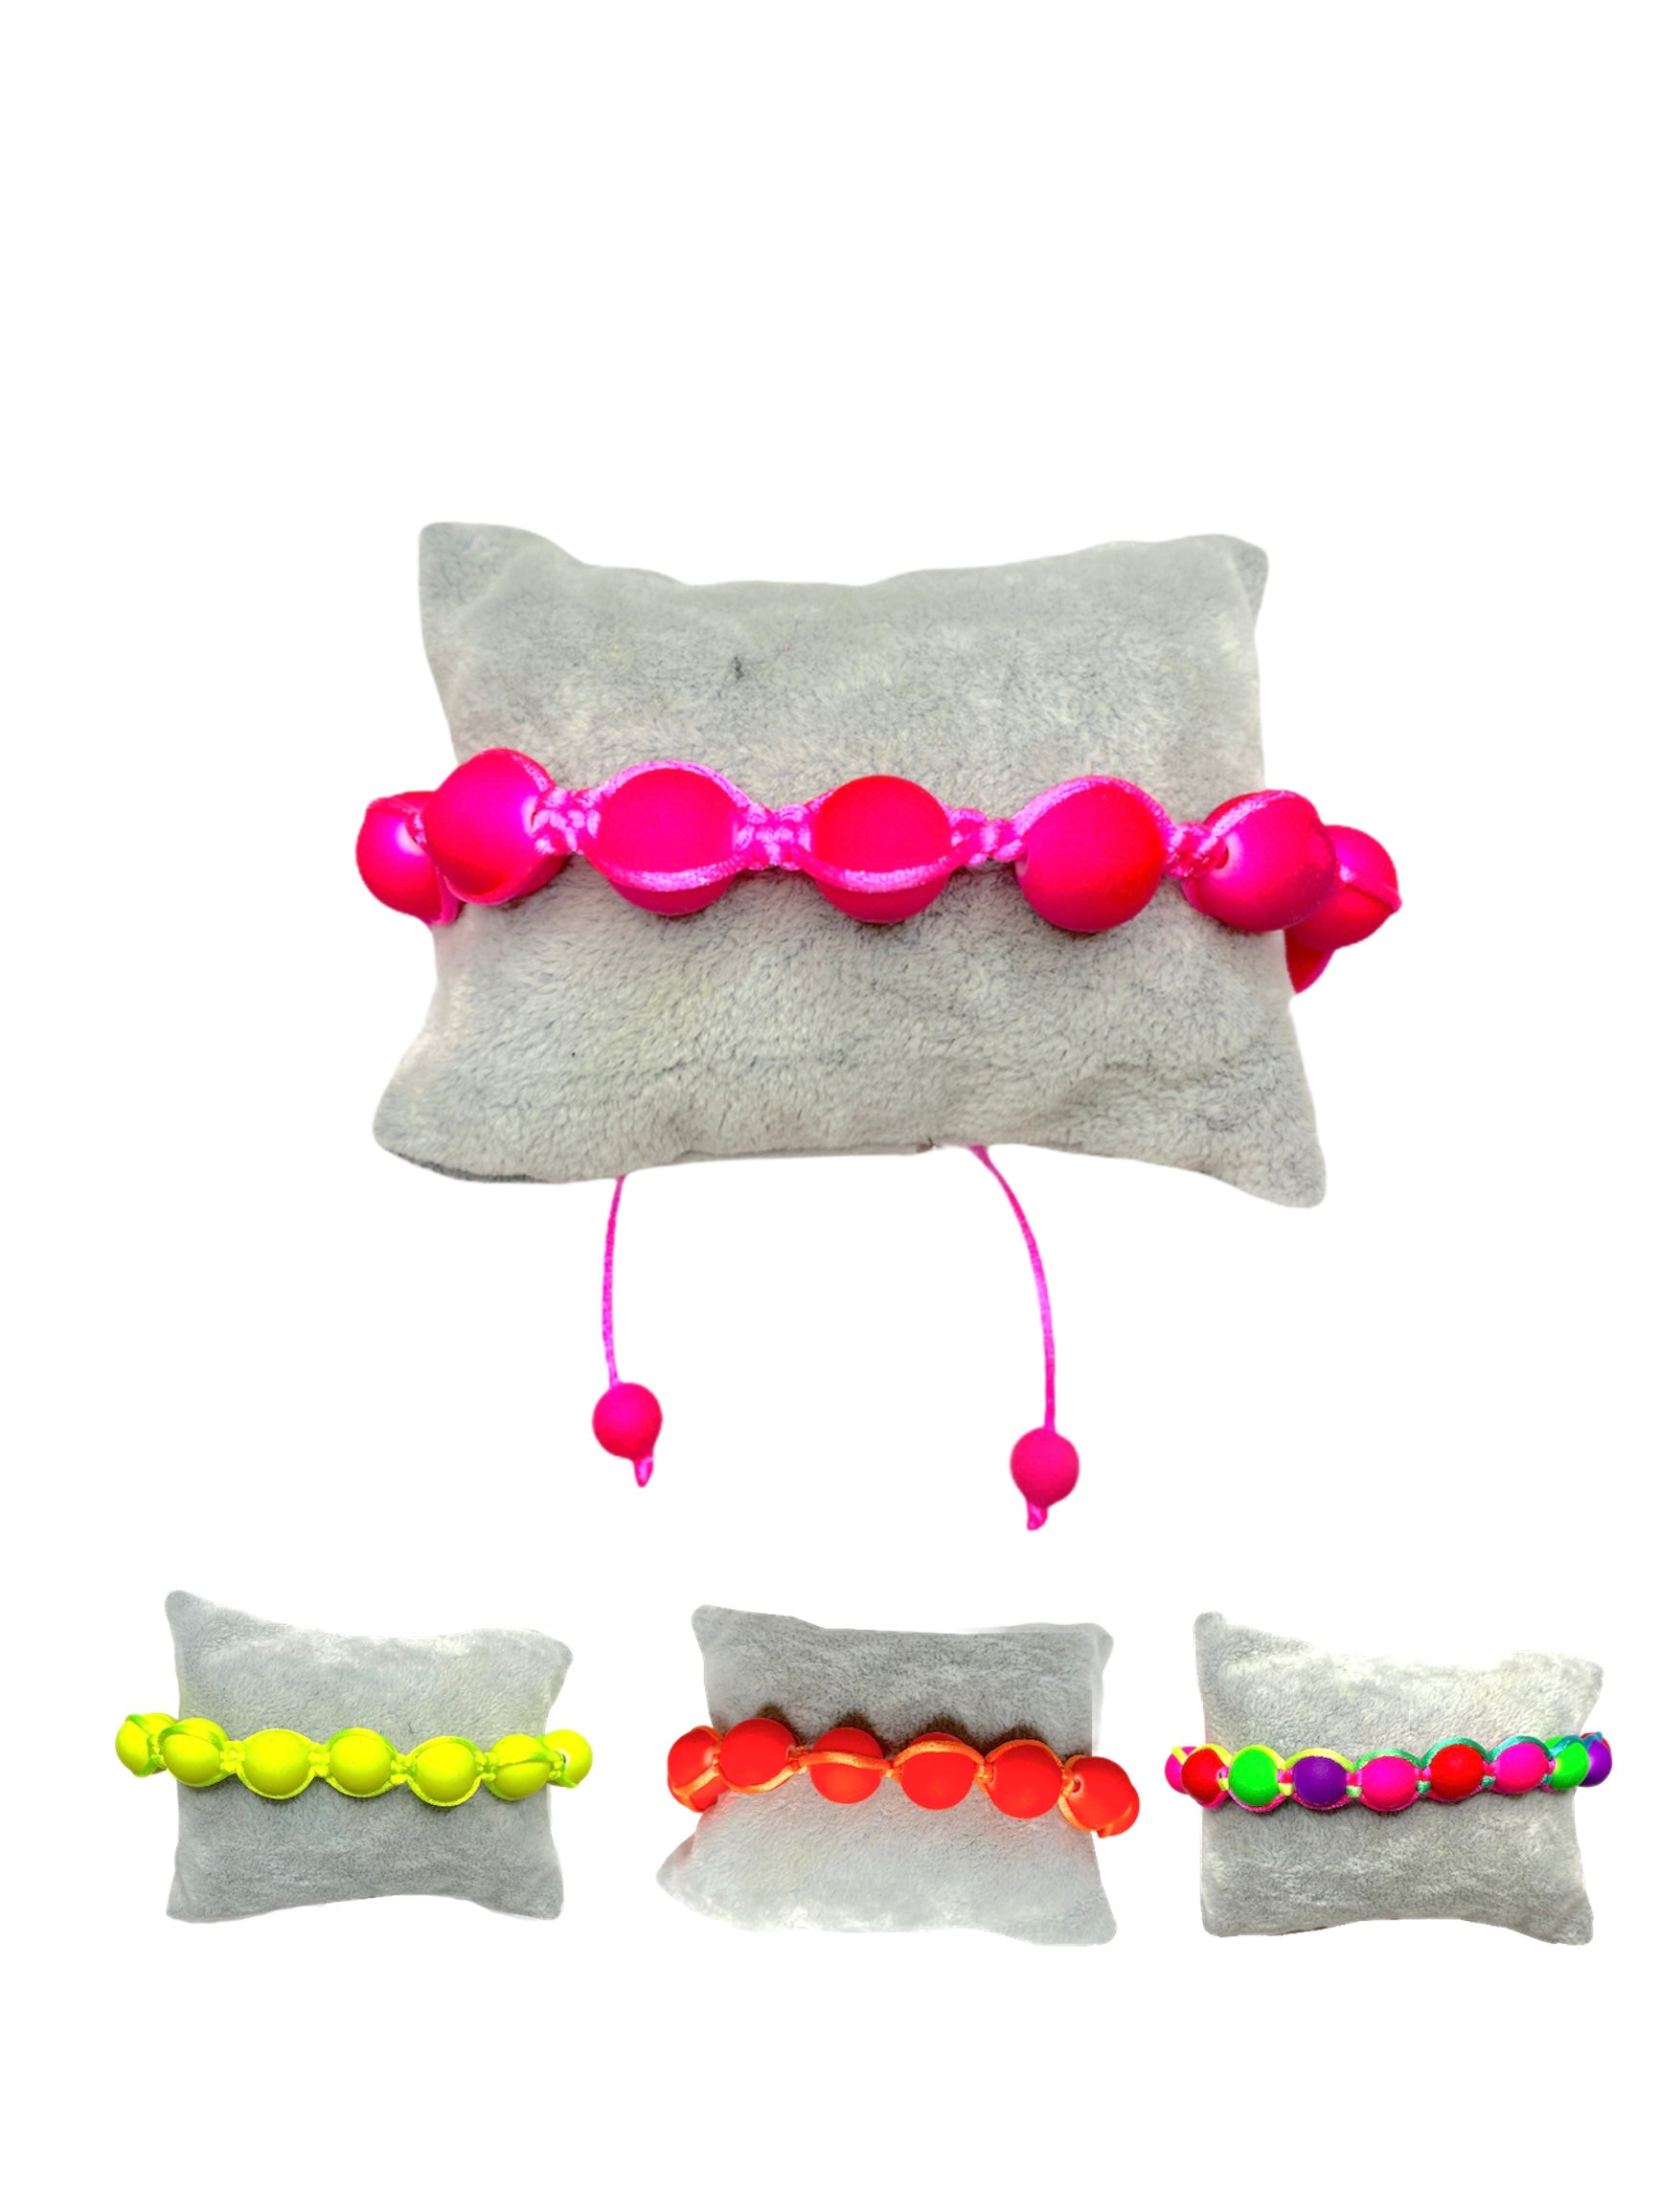 Fancy shambala ball bracelet mixed neon colors (x24)